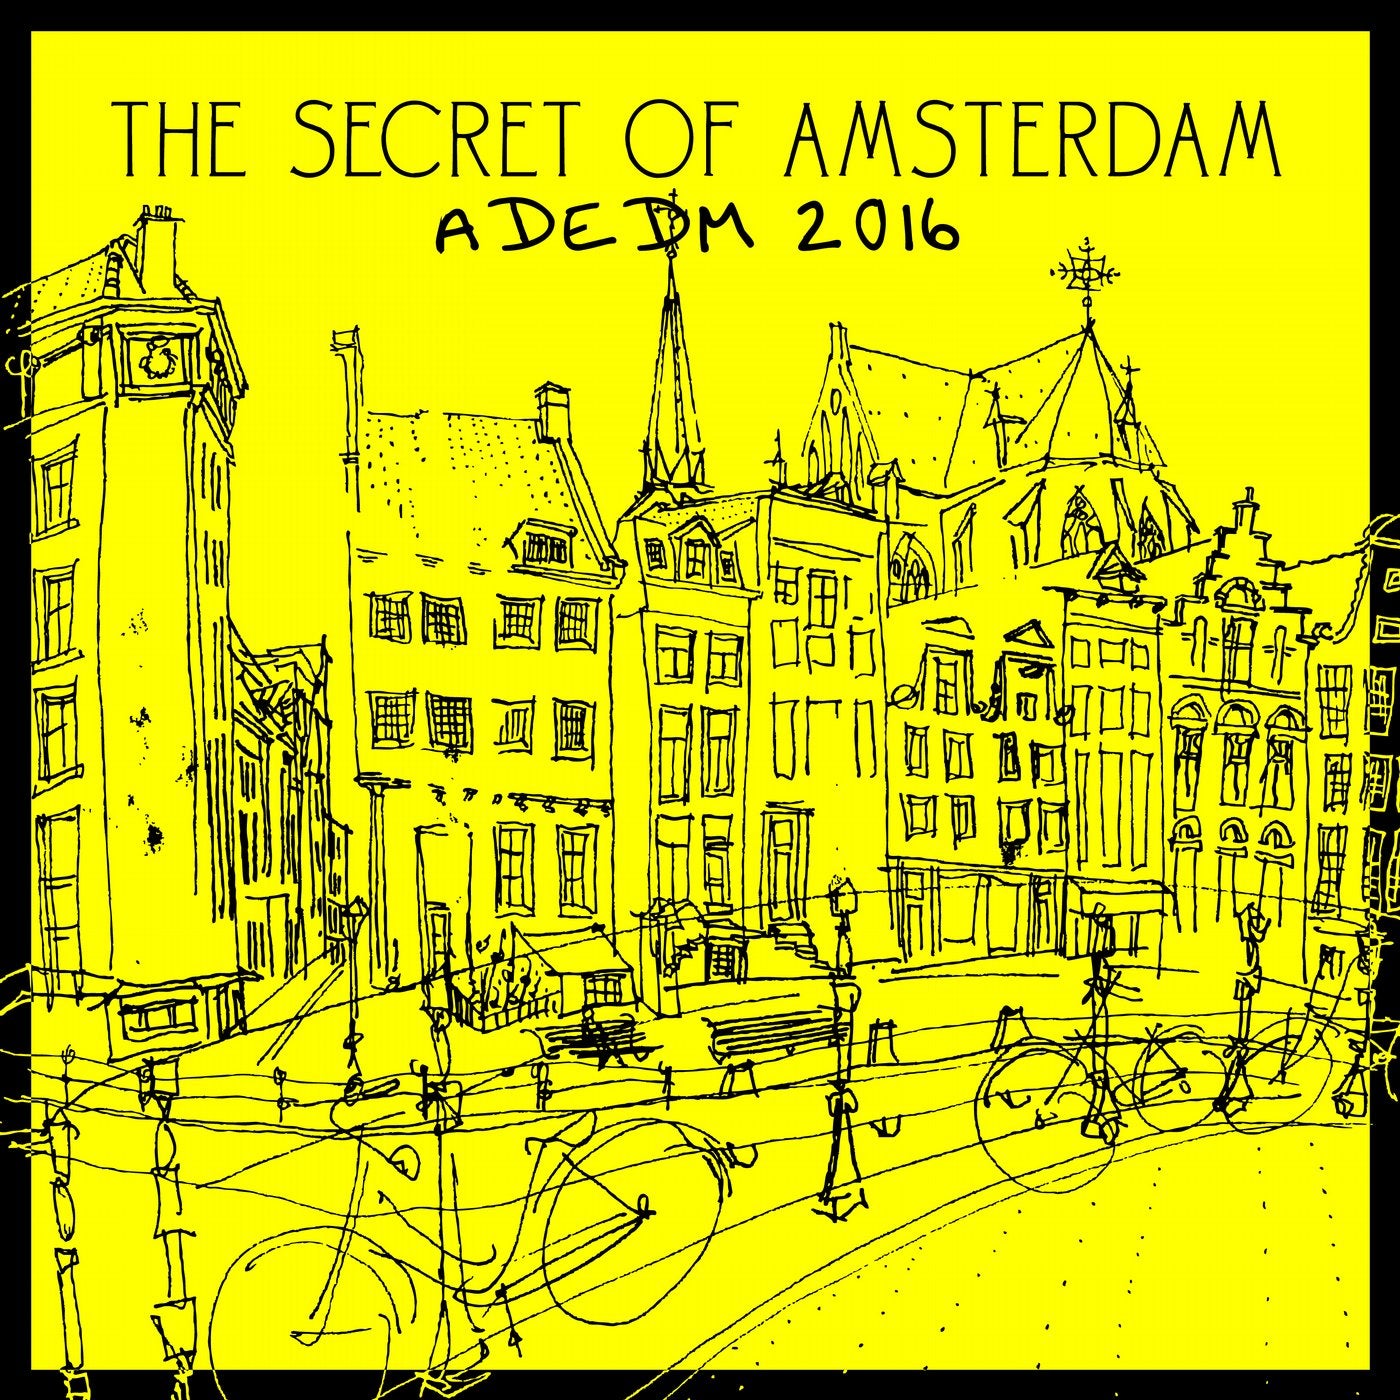 The Secret of Amsterdam ADEDM 2016